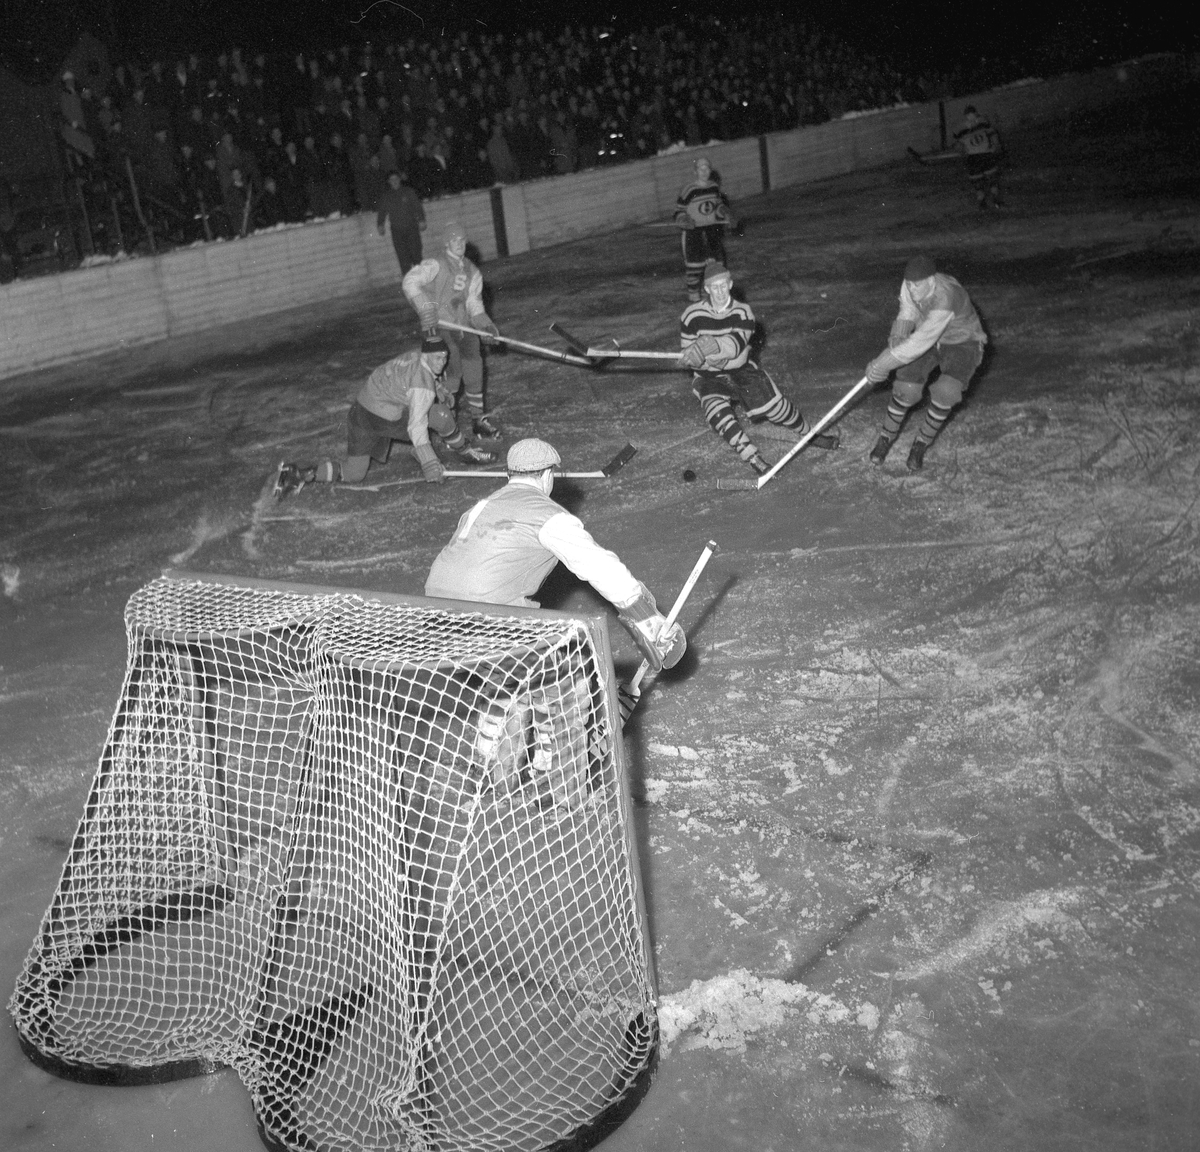 Sturehov - Fagersta, ishockey.
31 december 1958.